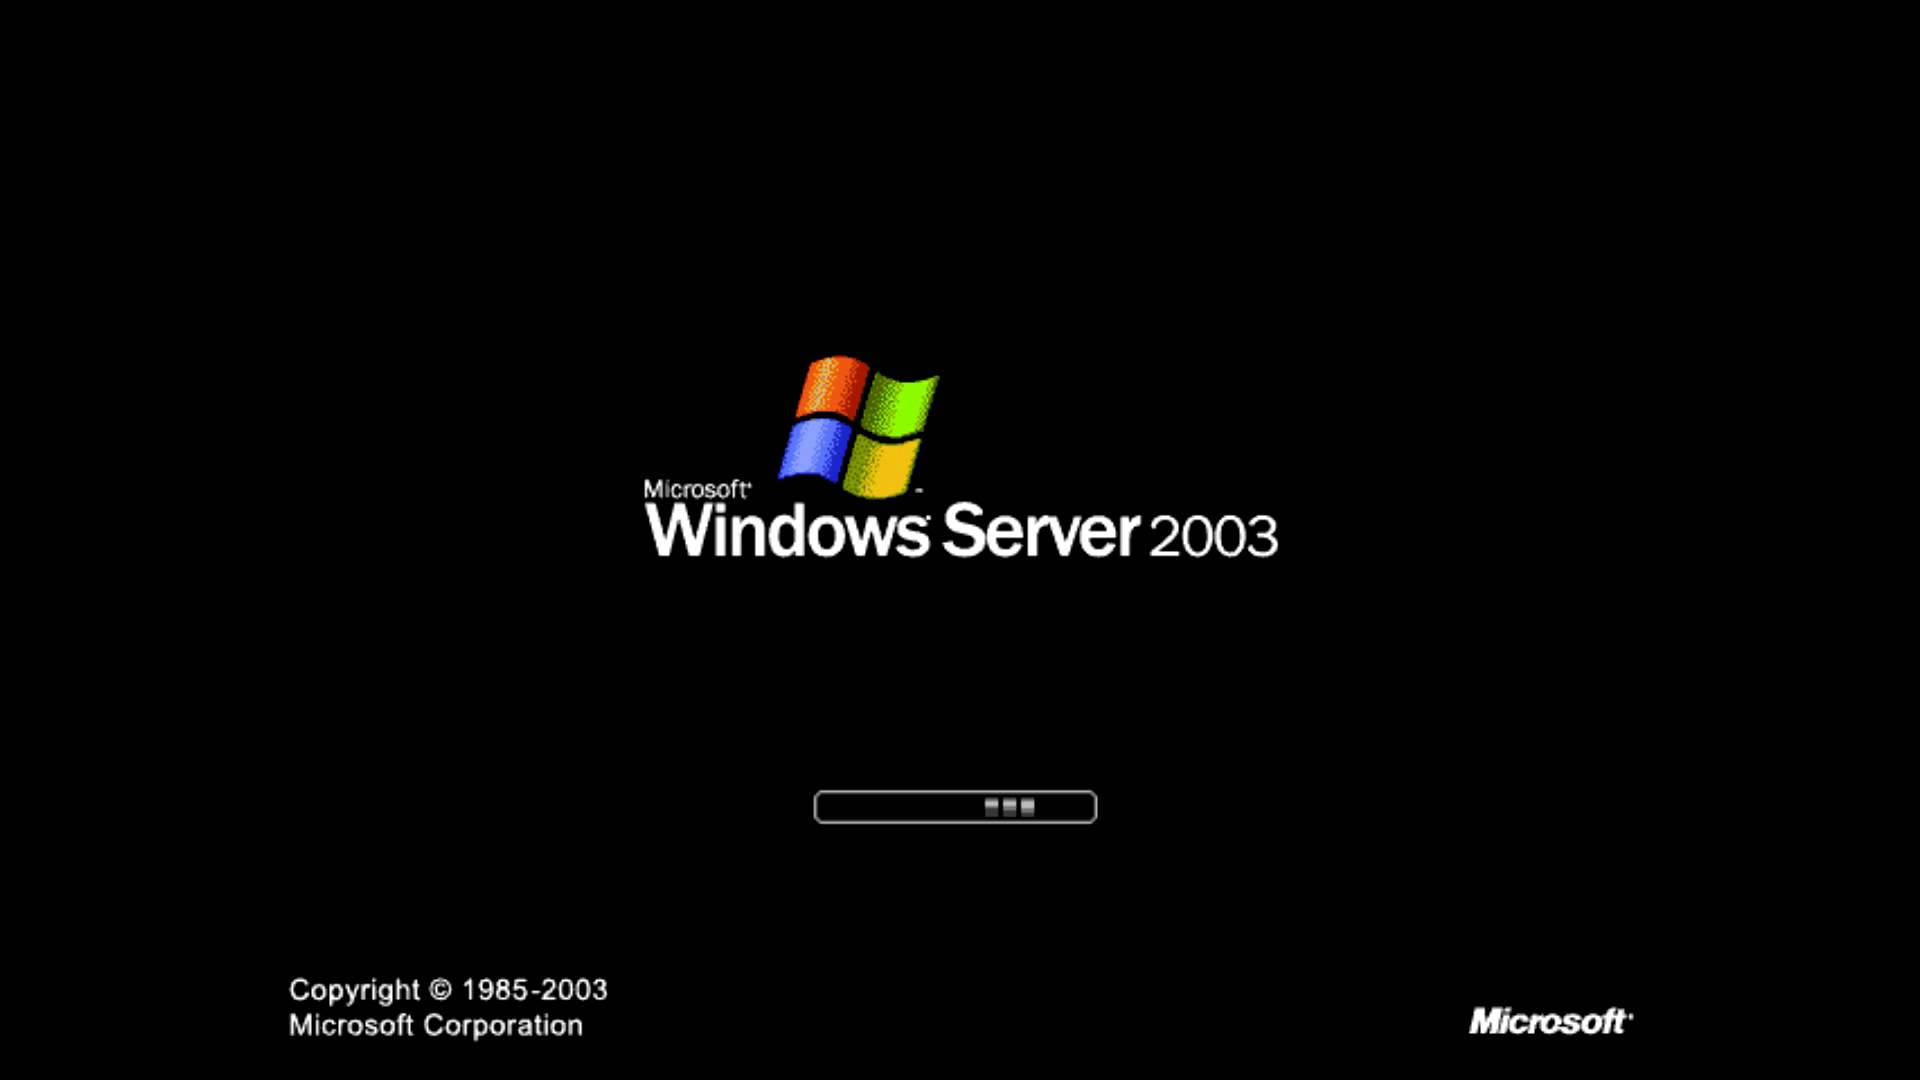 Windows Server 2003 (UK Version) Has Another Sparta Remix